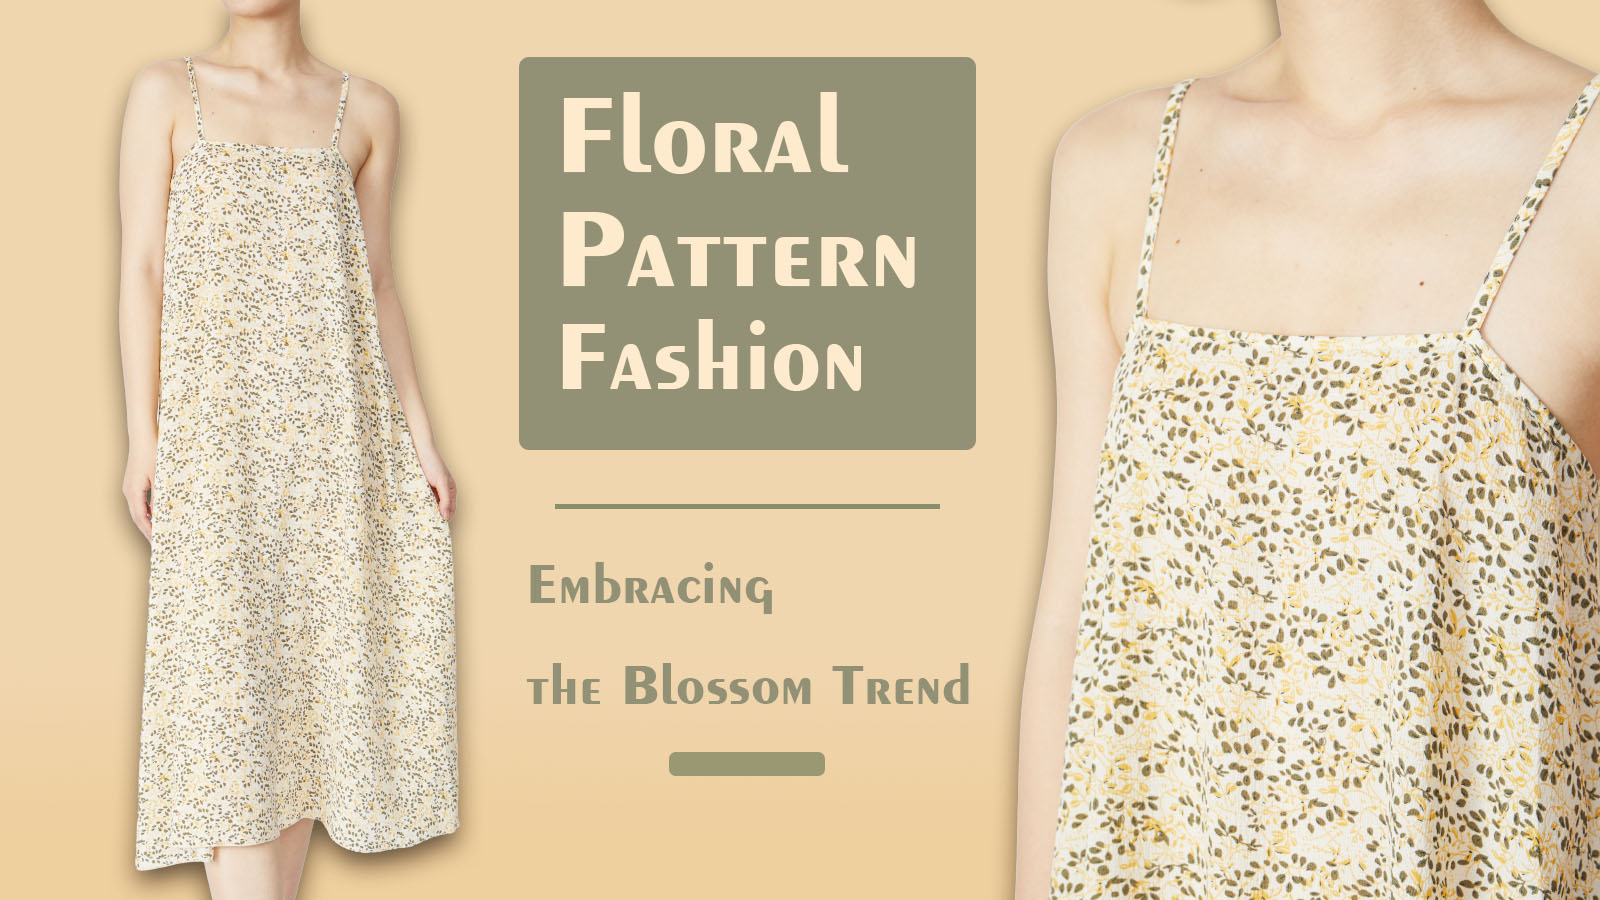 Embracing the Blossom Trend